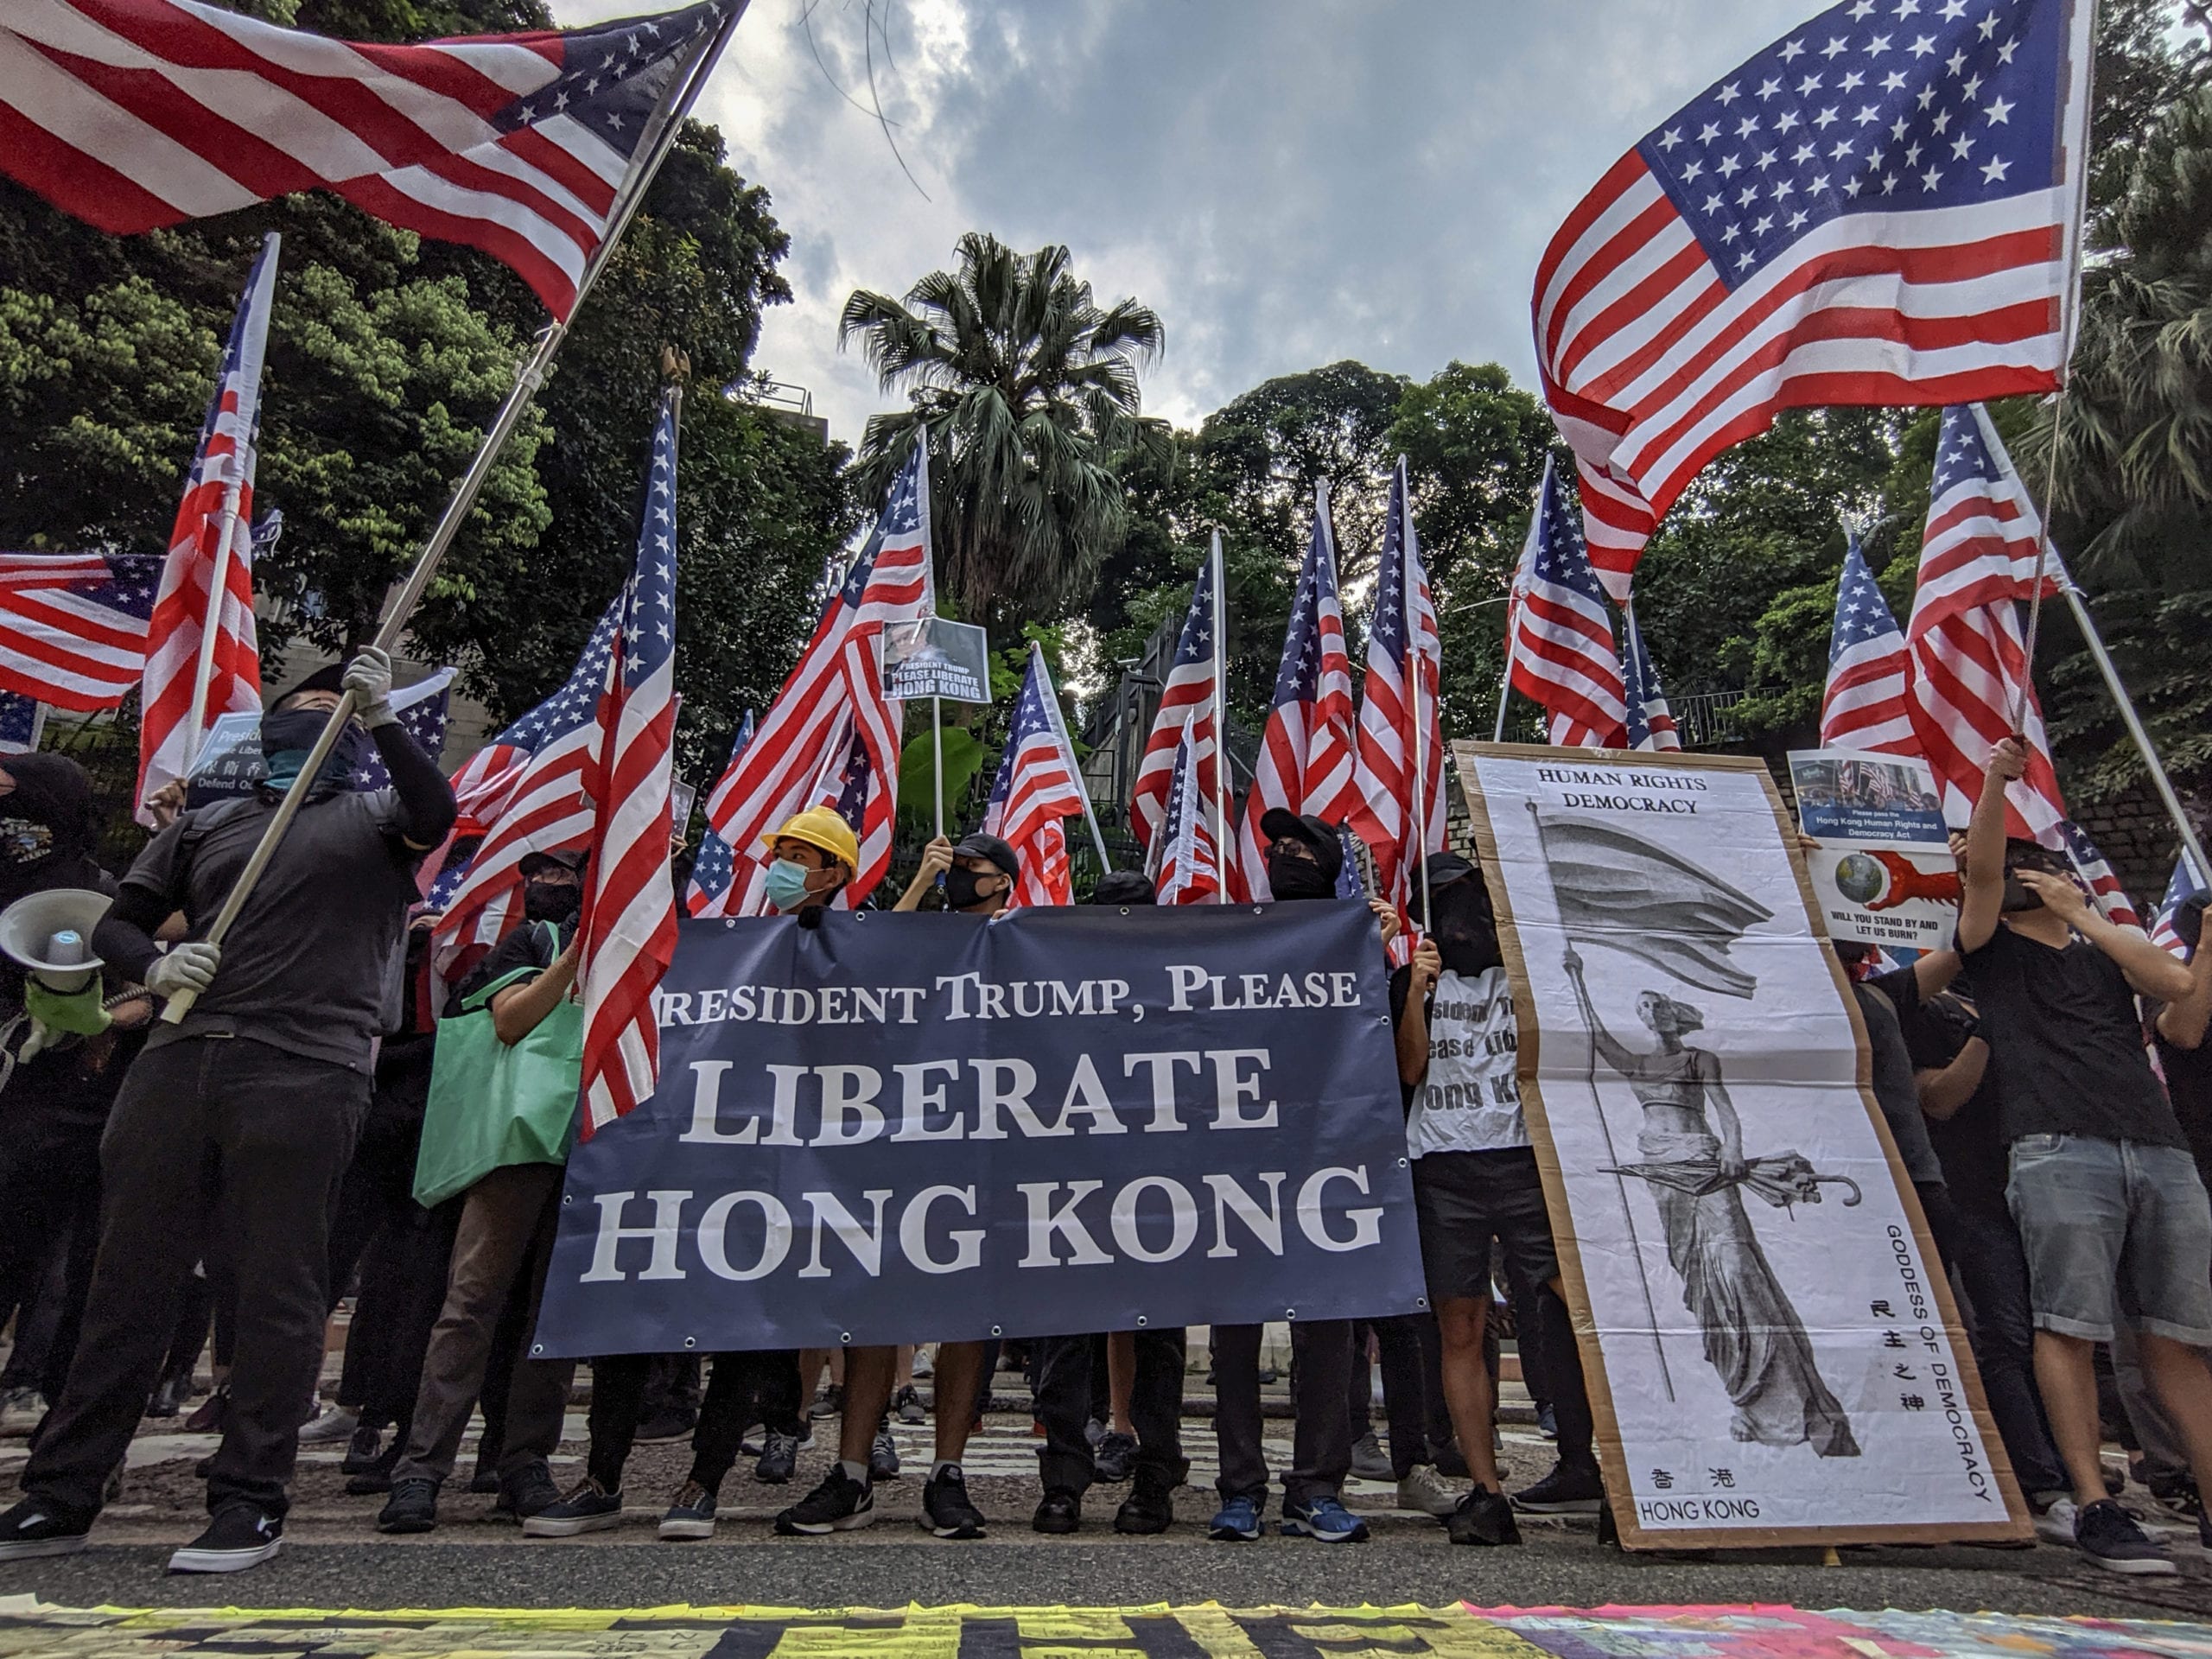 2019-09-08_Hong_Kong_anti-extradition_bill_protest_04.jpg